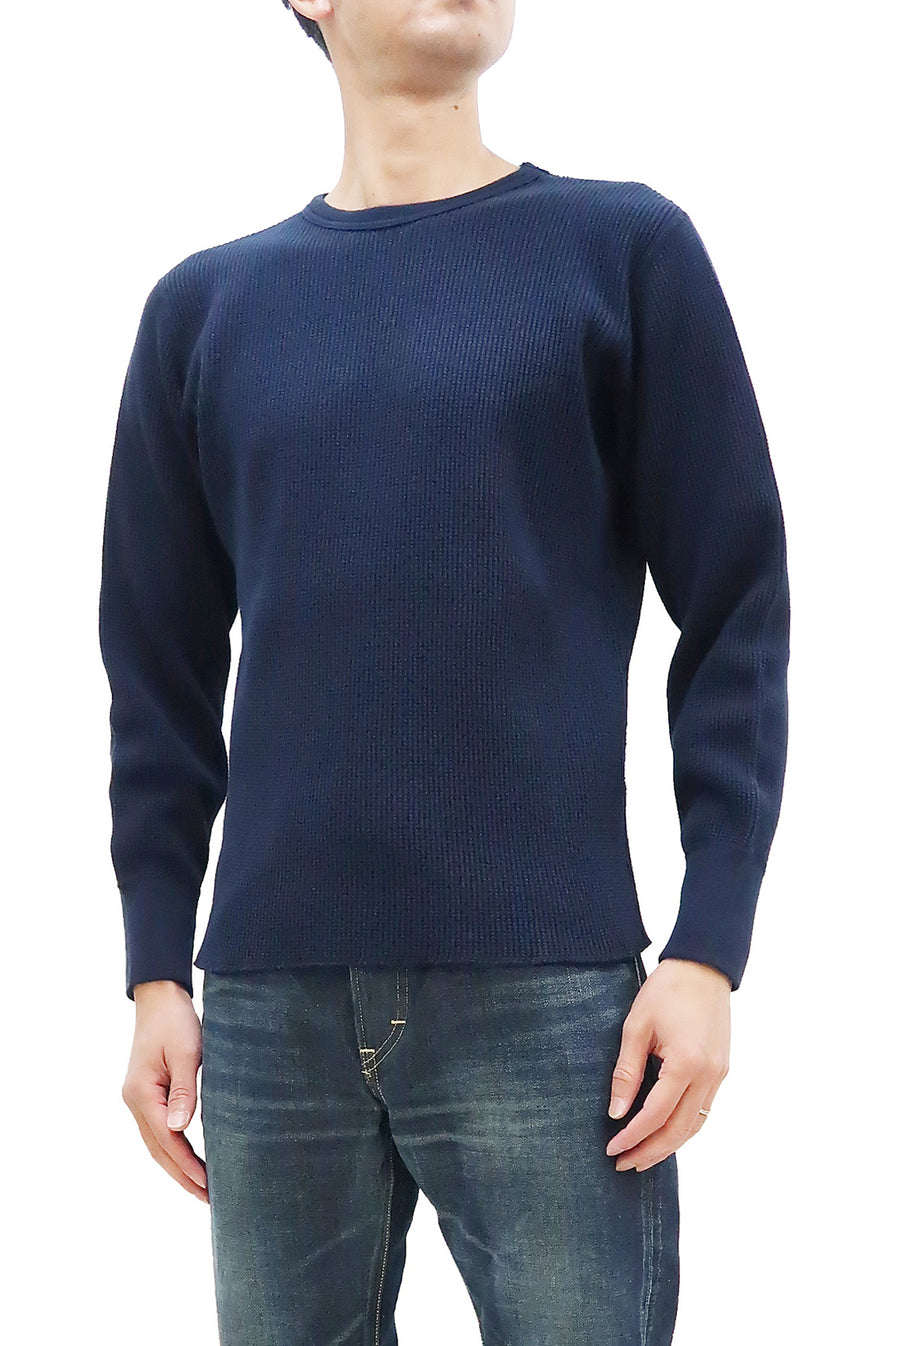 Men's Long Sleeve Thermal Shirt Medium Weight Warm Waffle Knit Layering